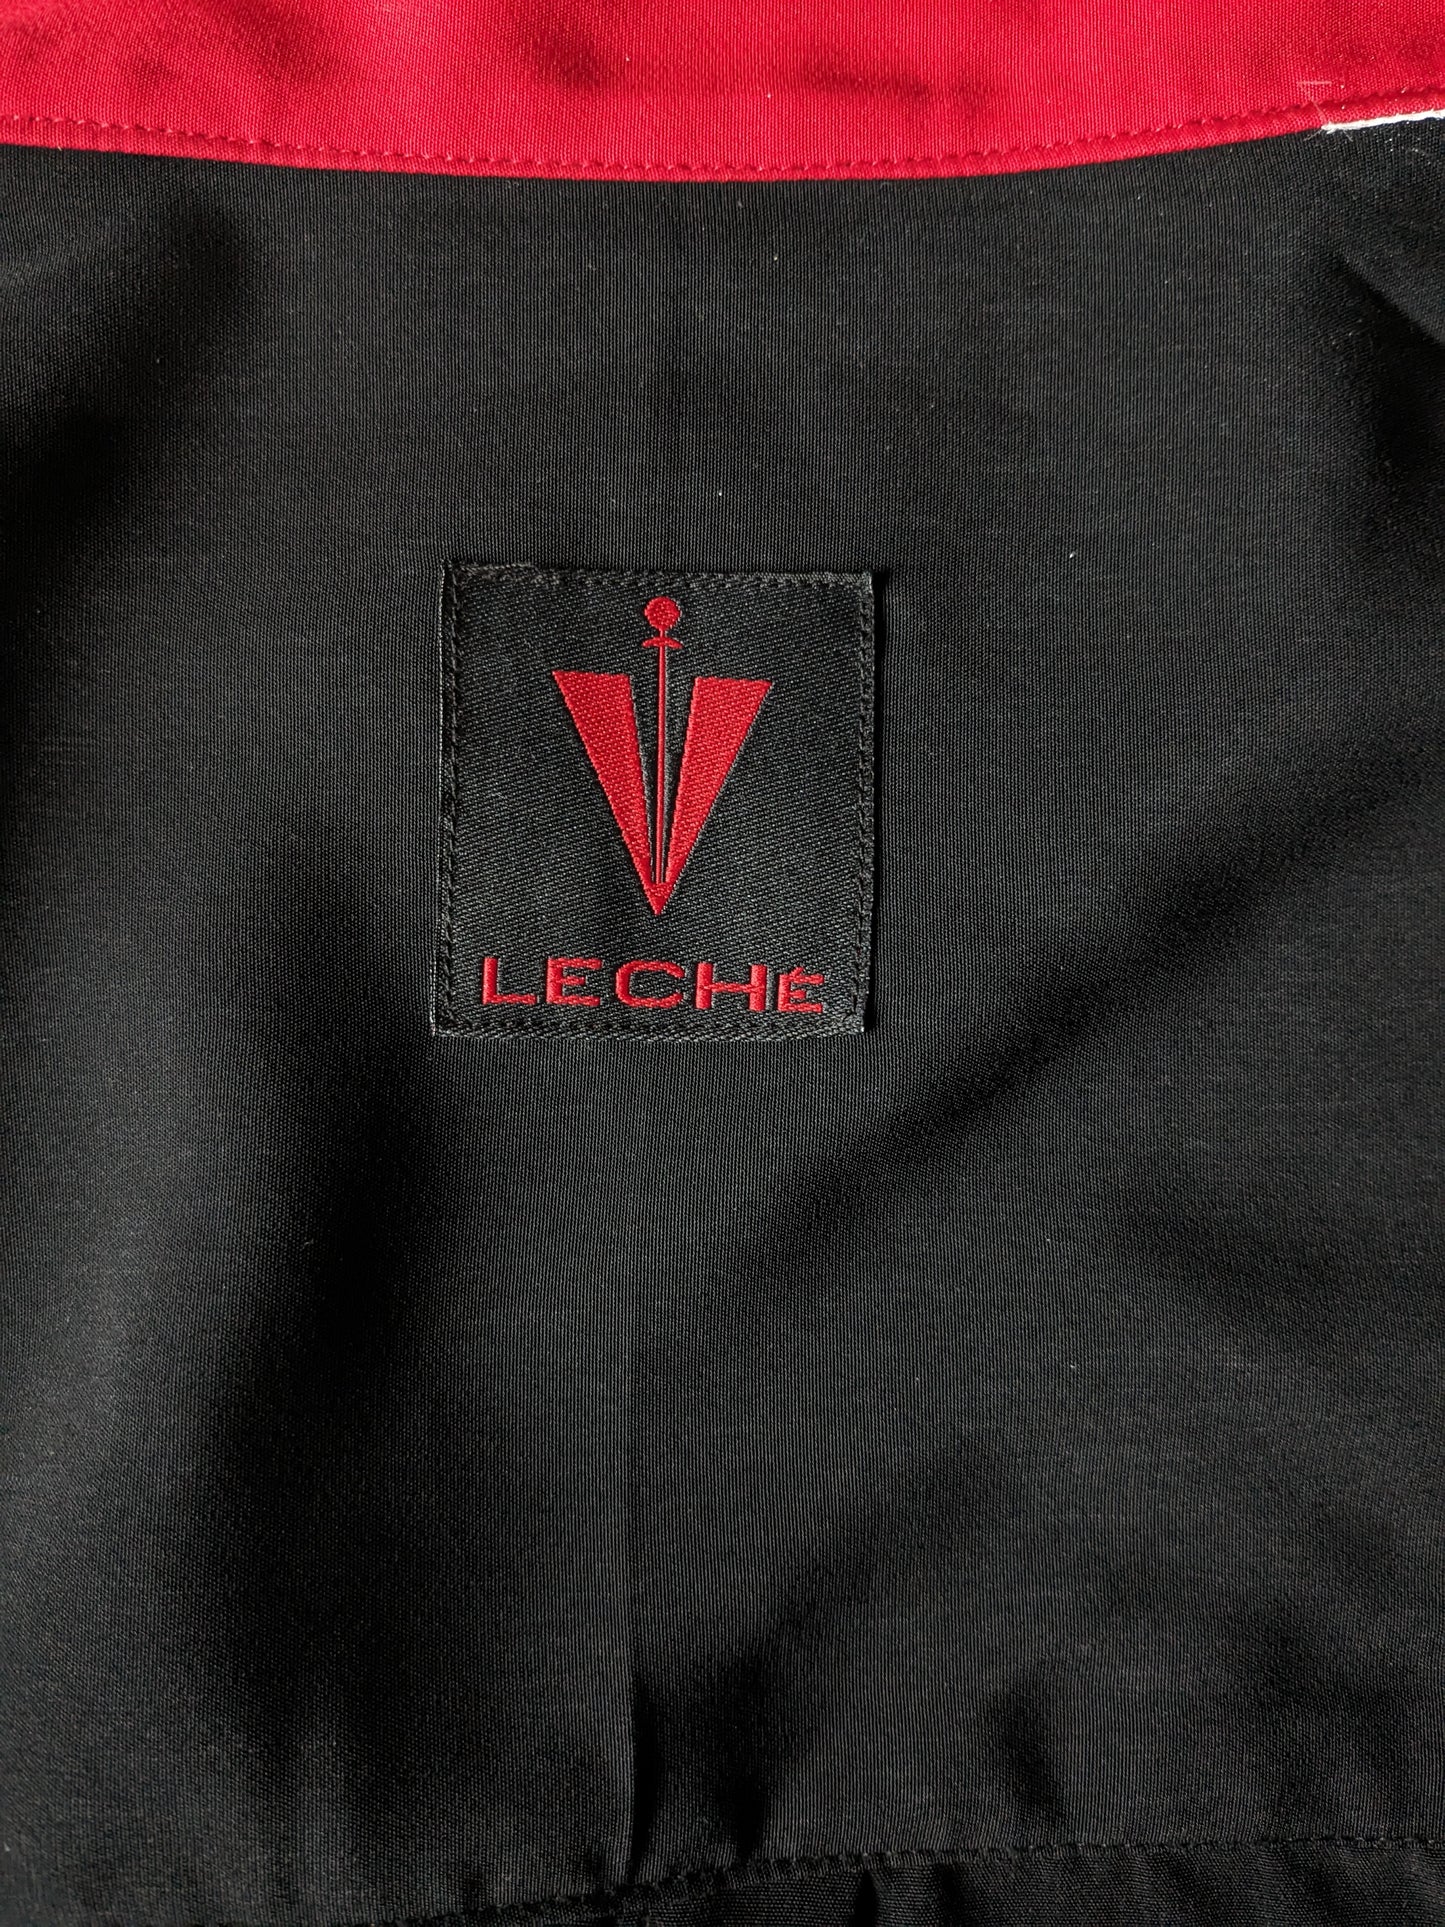 Vintage Leche overhemd opstaande / farmers / Mao kraag. Zwart. Maat XL.